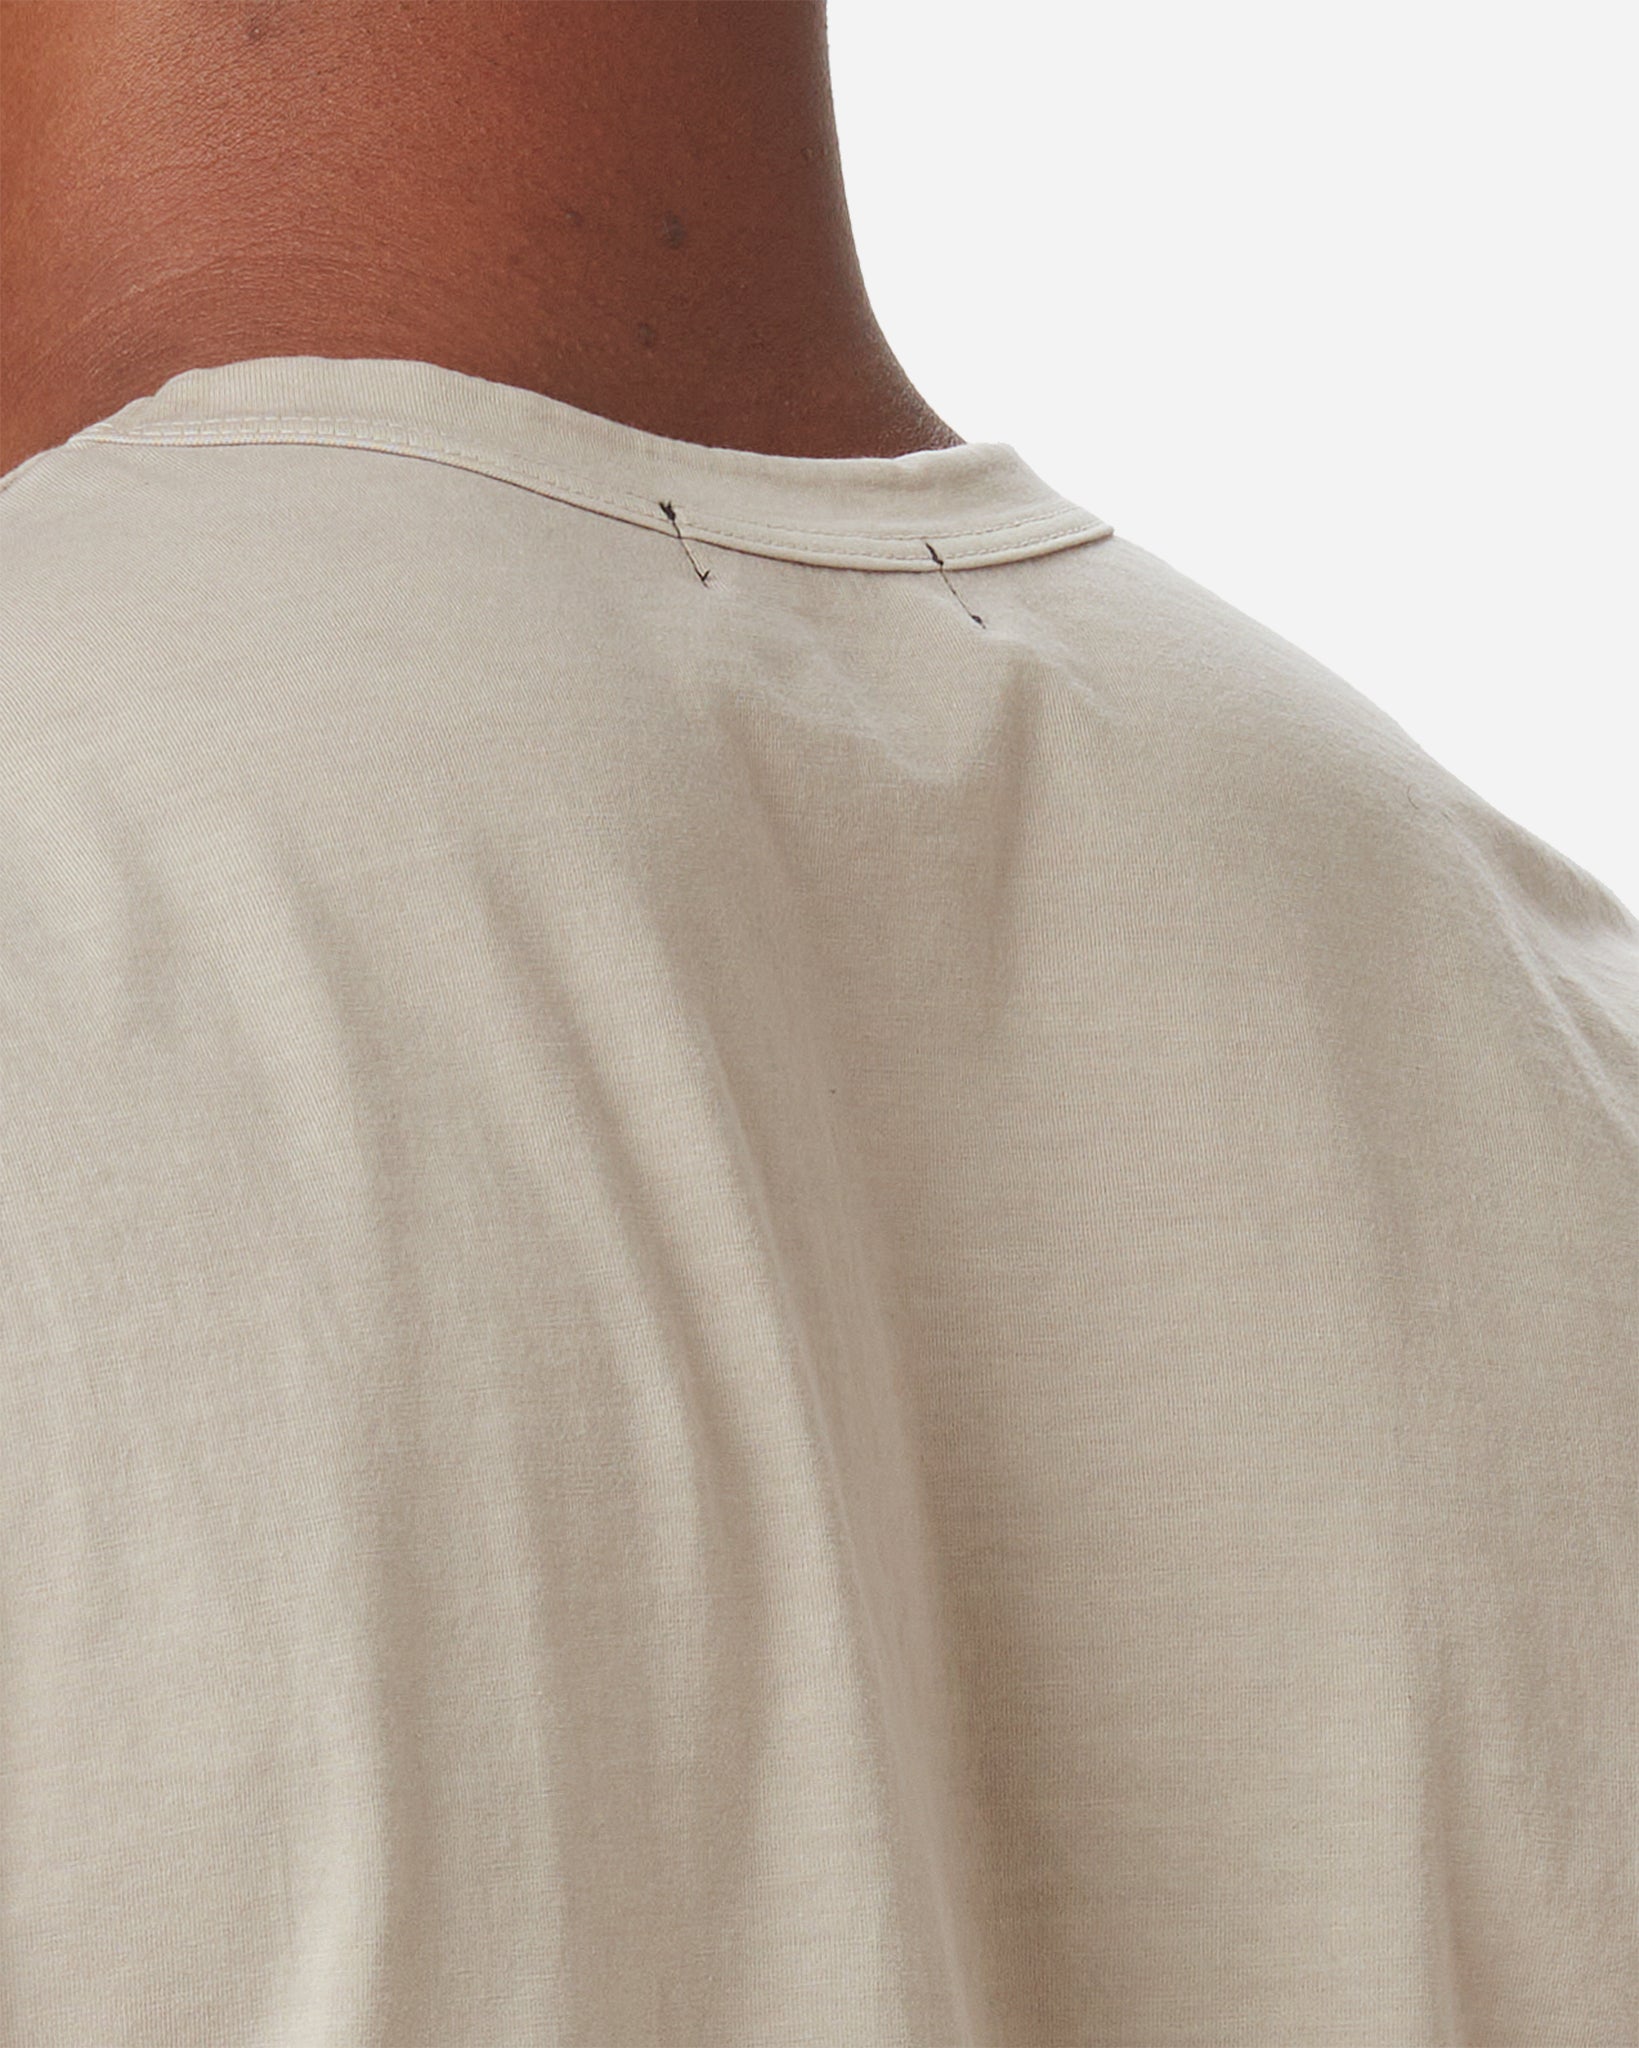 close up of back of model's neck wearing Ace Rivington long staple light beige sand coloredsuper soft short-sleeved cotton shirt 